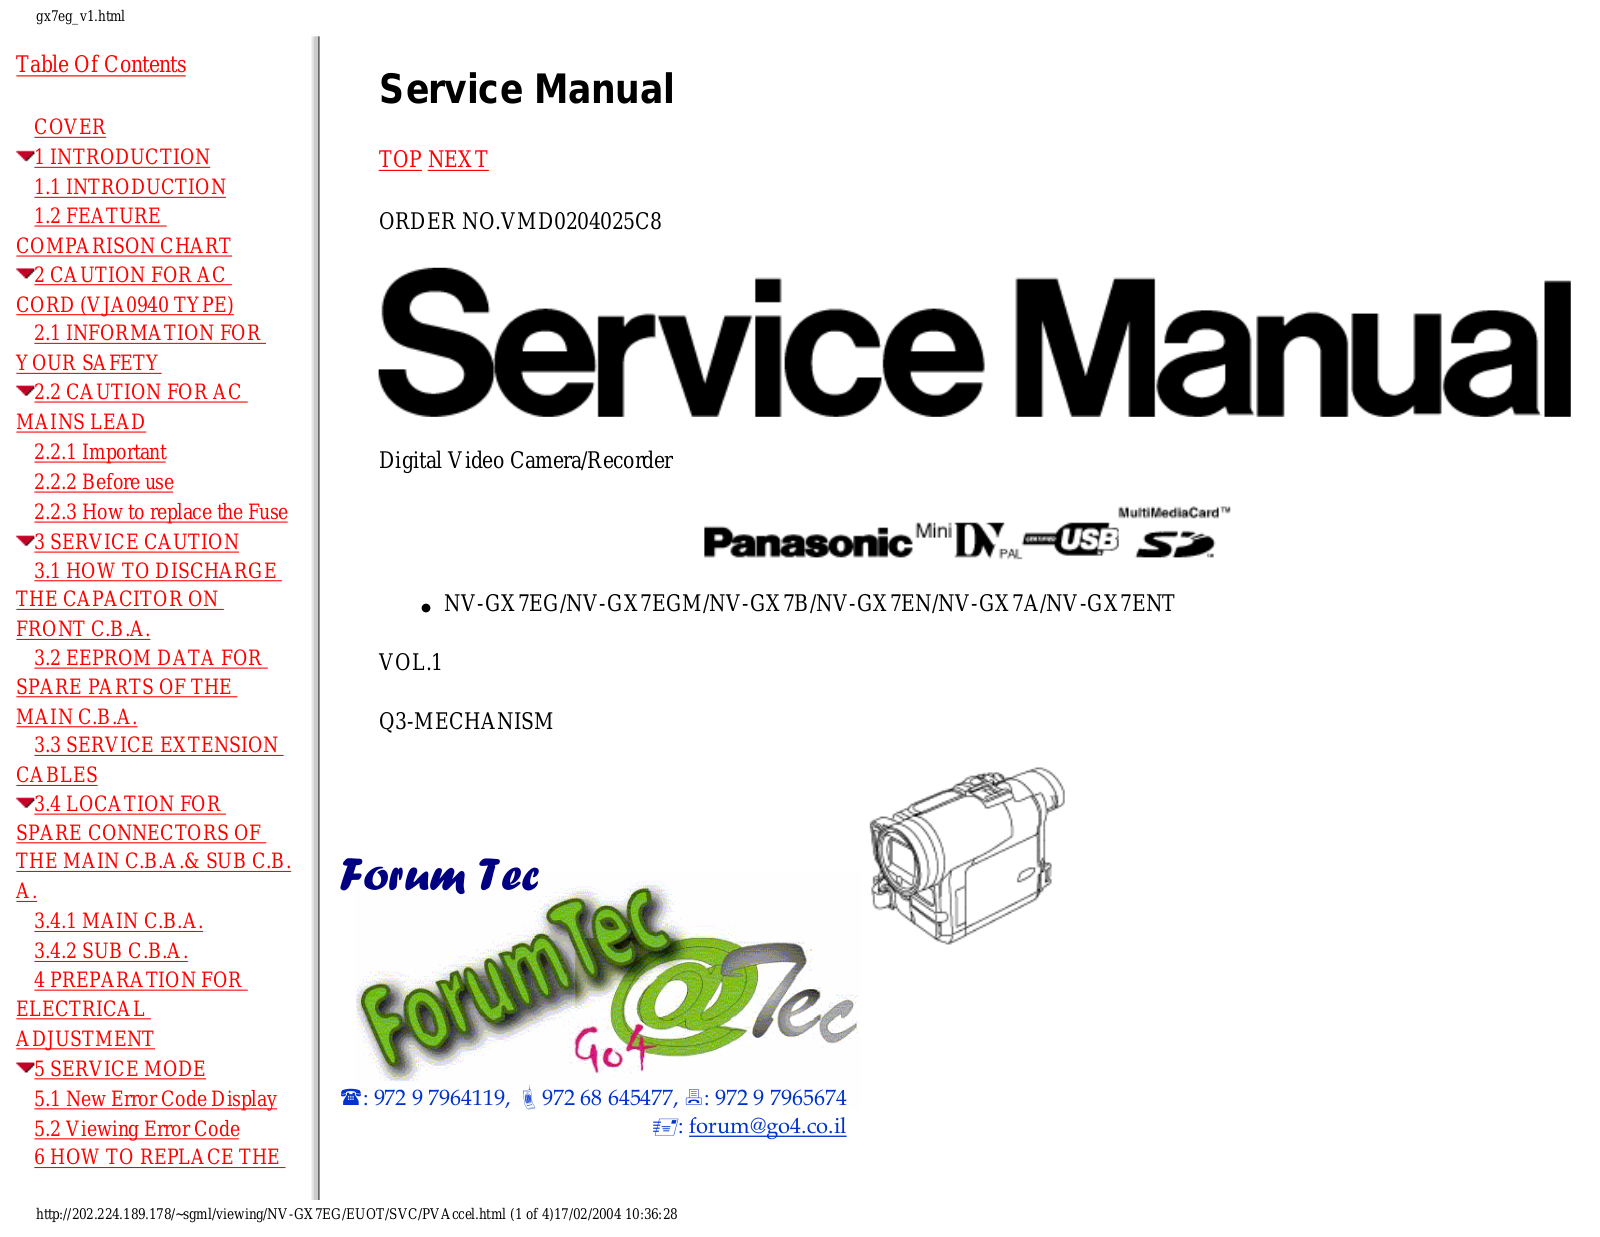 panasonic NV-GX7EG, NV-GX7EGM, NV-GX7B, NV-GX7EN, NV-GX7A Service Manual